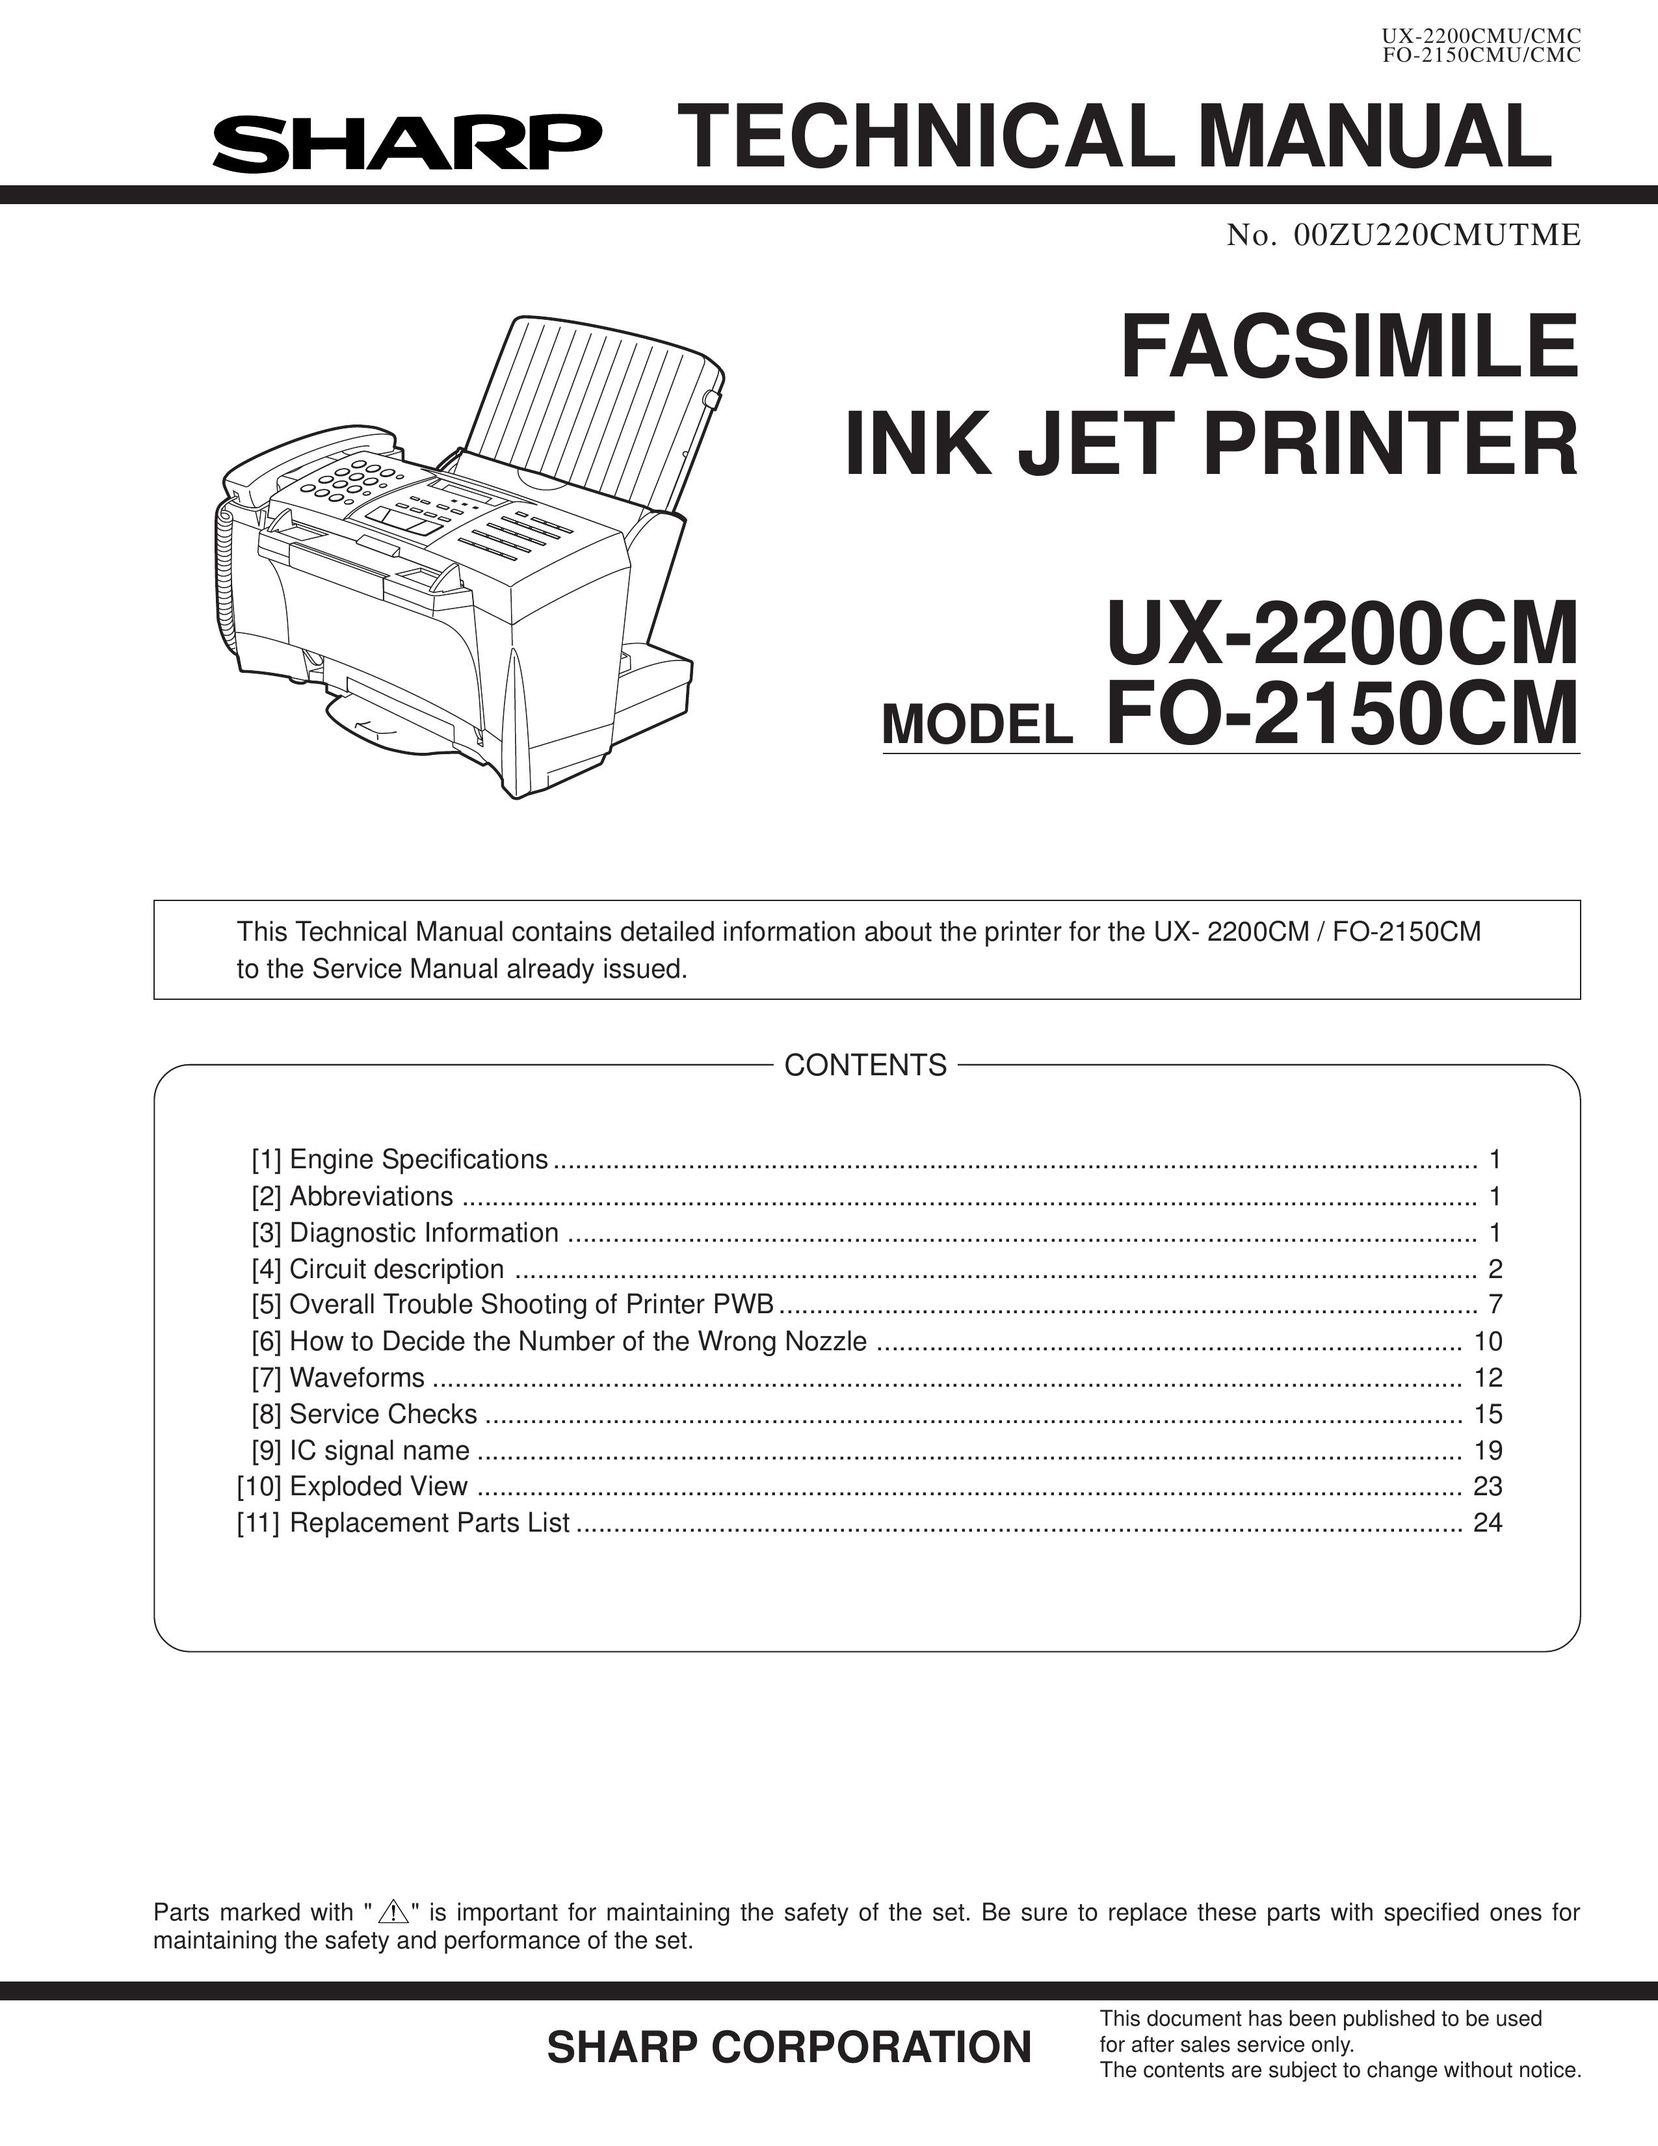 Sharp FO-2150CM Fax Machine User Manual